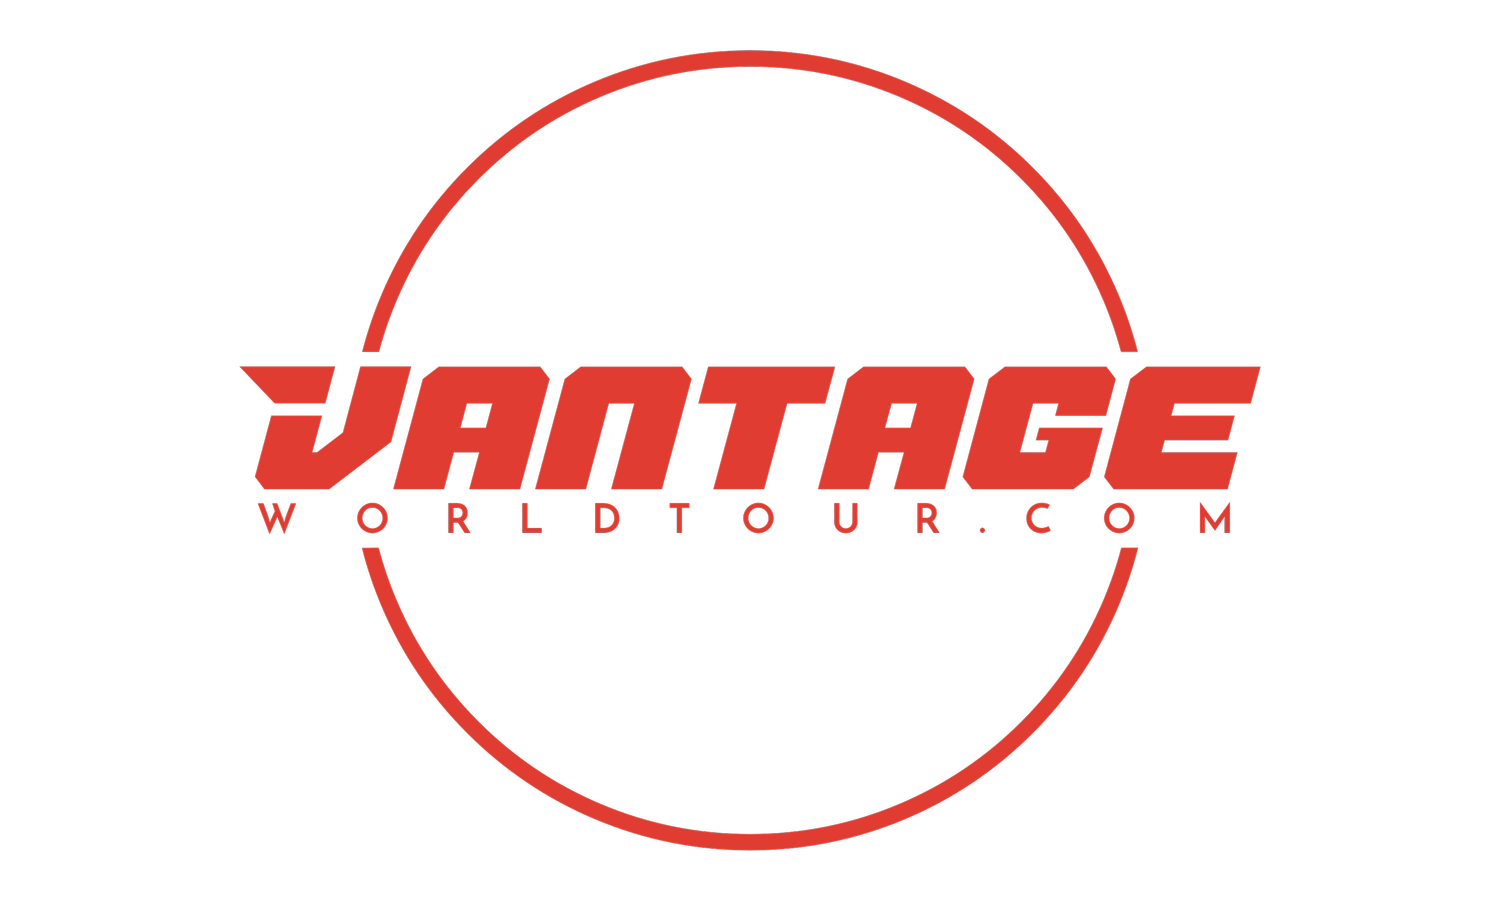 Vantage World Tour